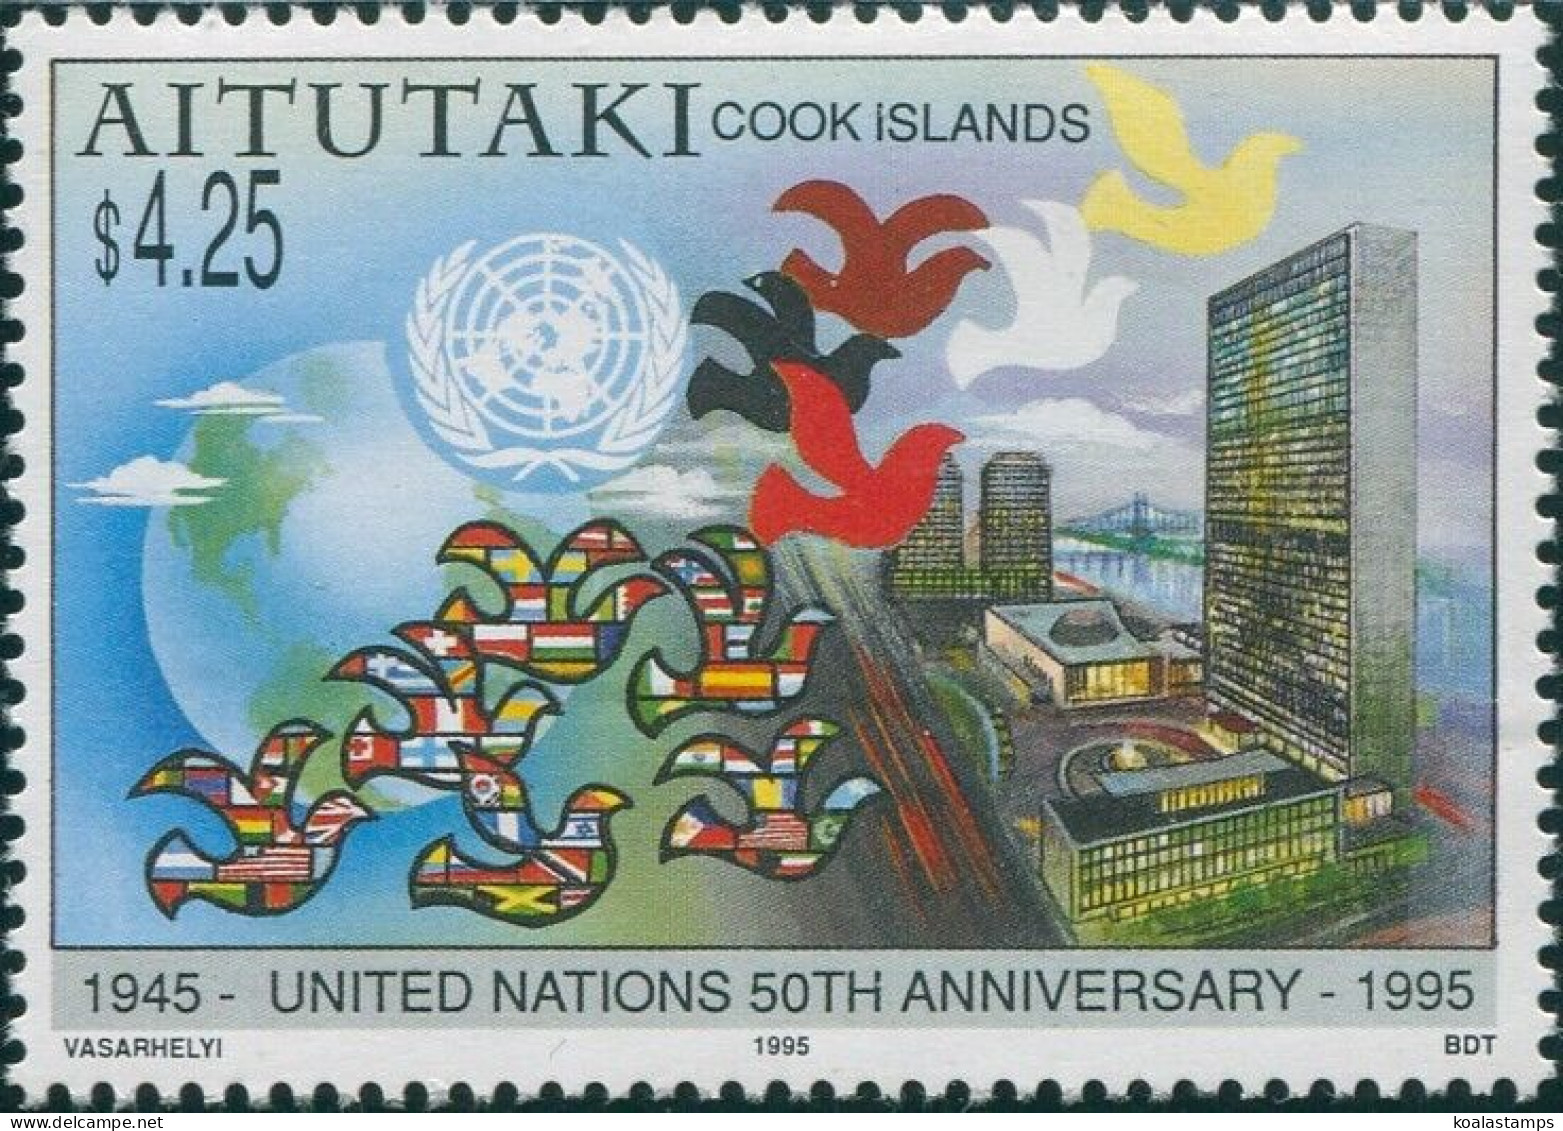 Aitutaki 1995 SG689 $4.25 United Nations MNH - Cook